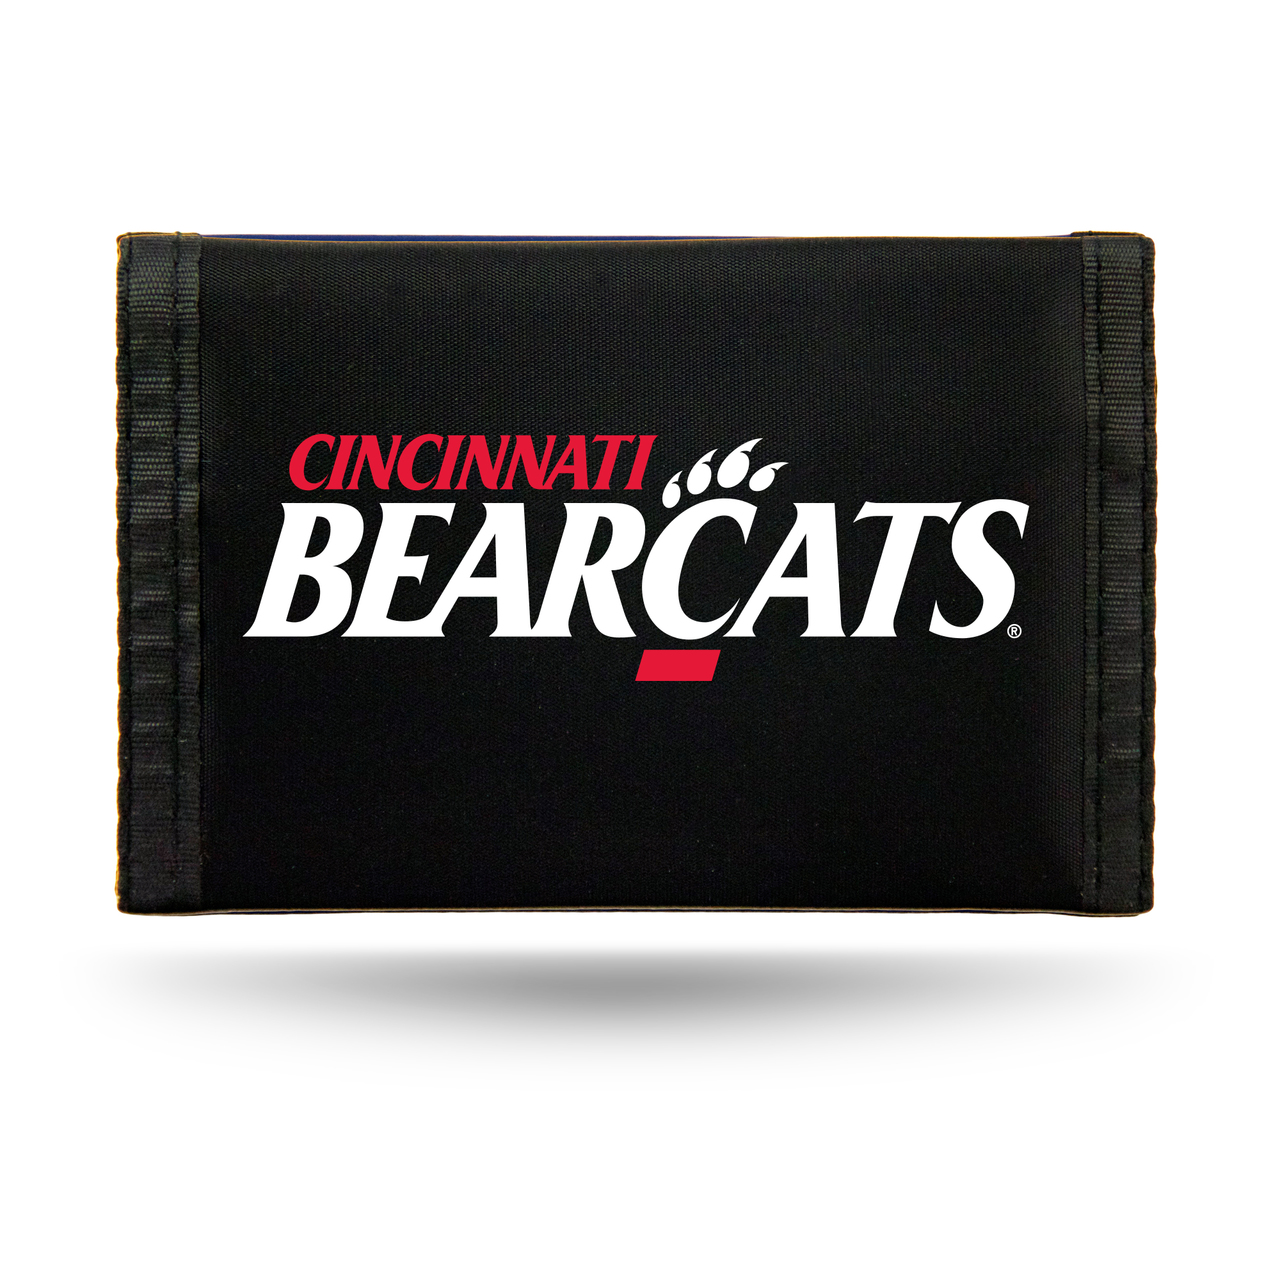 Cincinnati Bearcats Wallet Nylon Trifold - Special Order